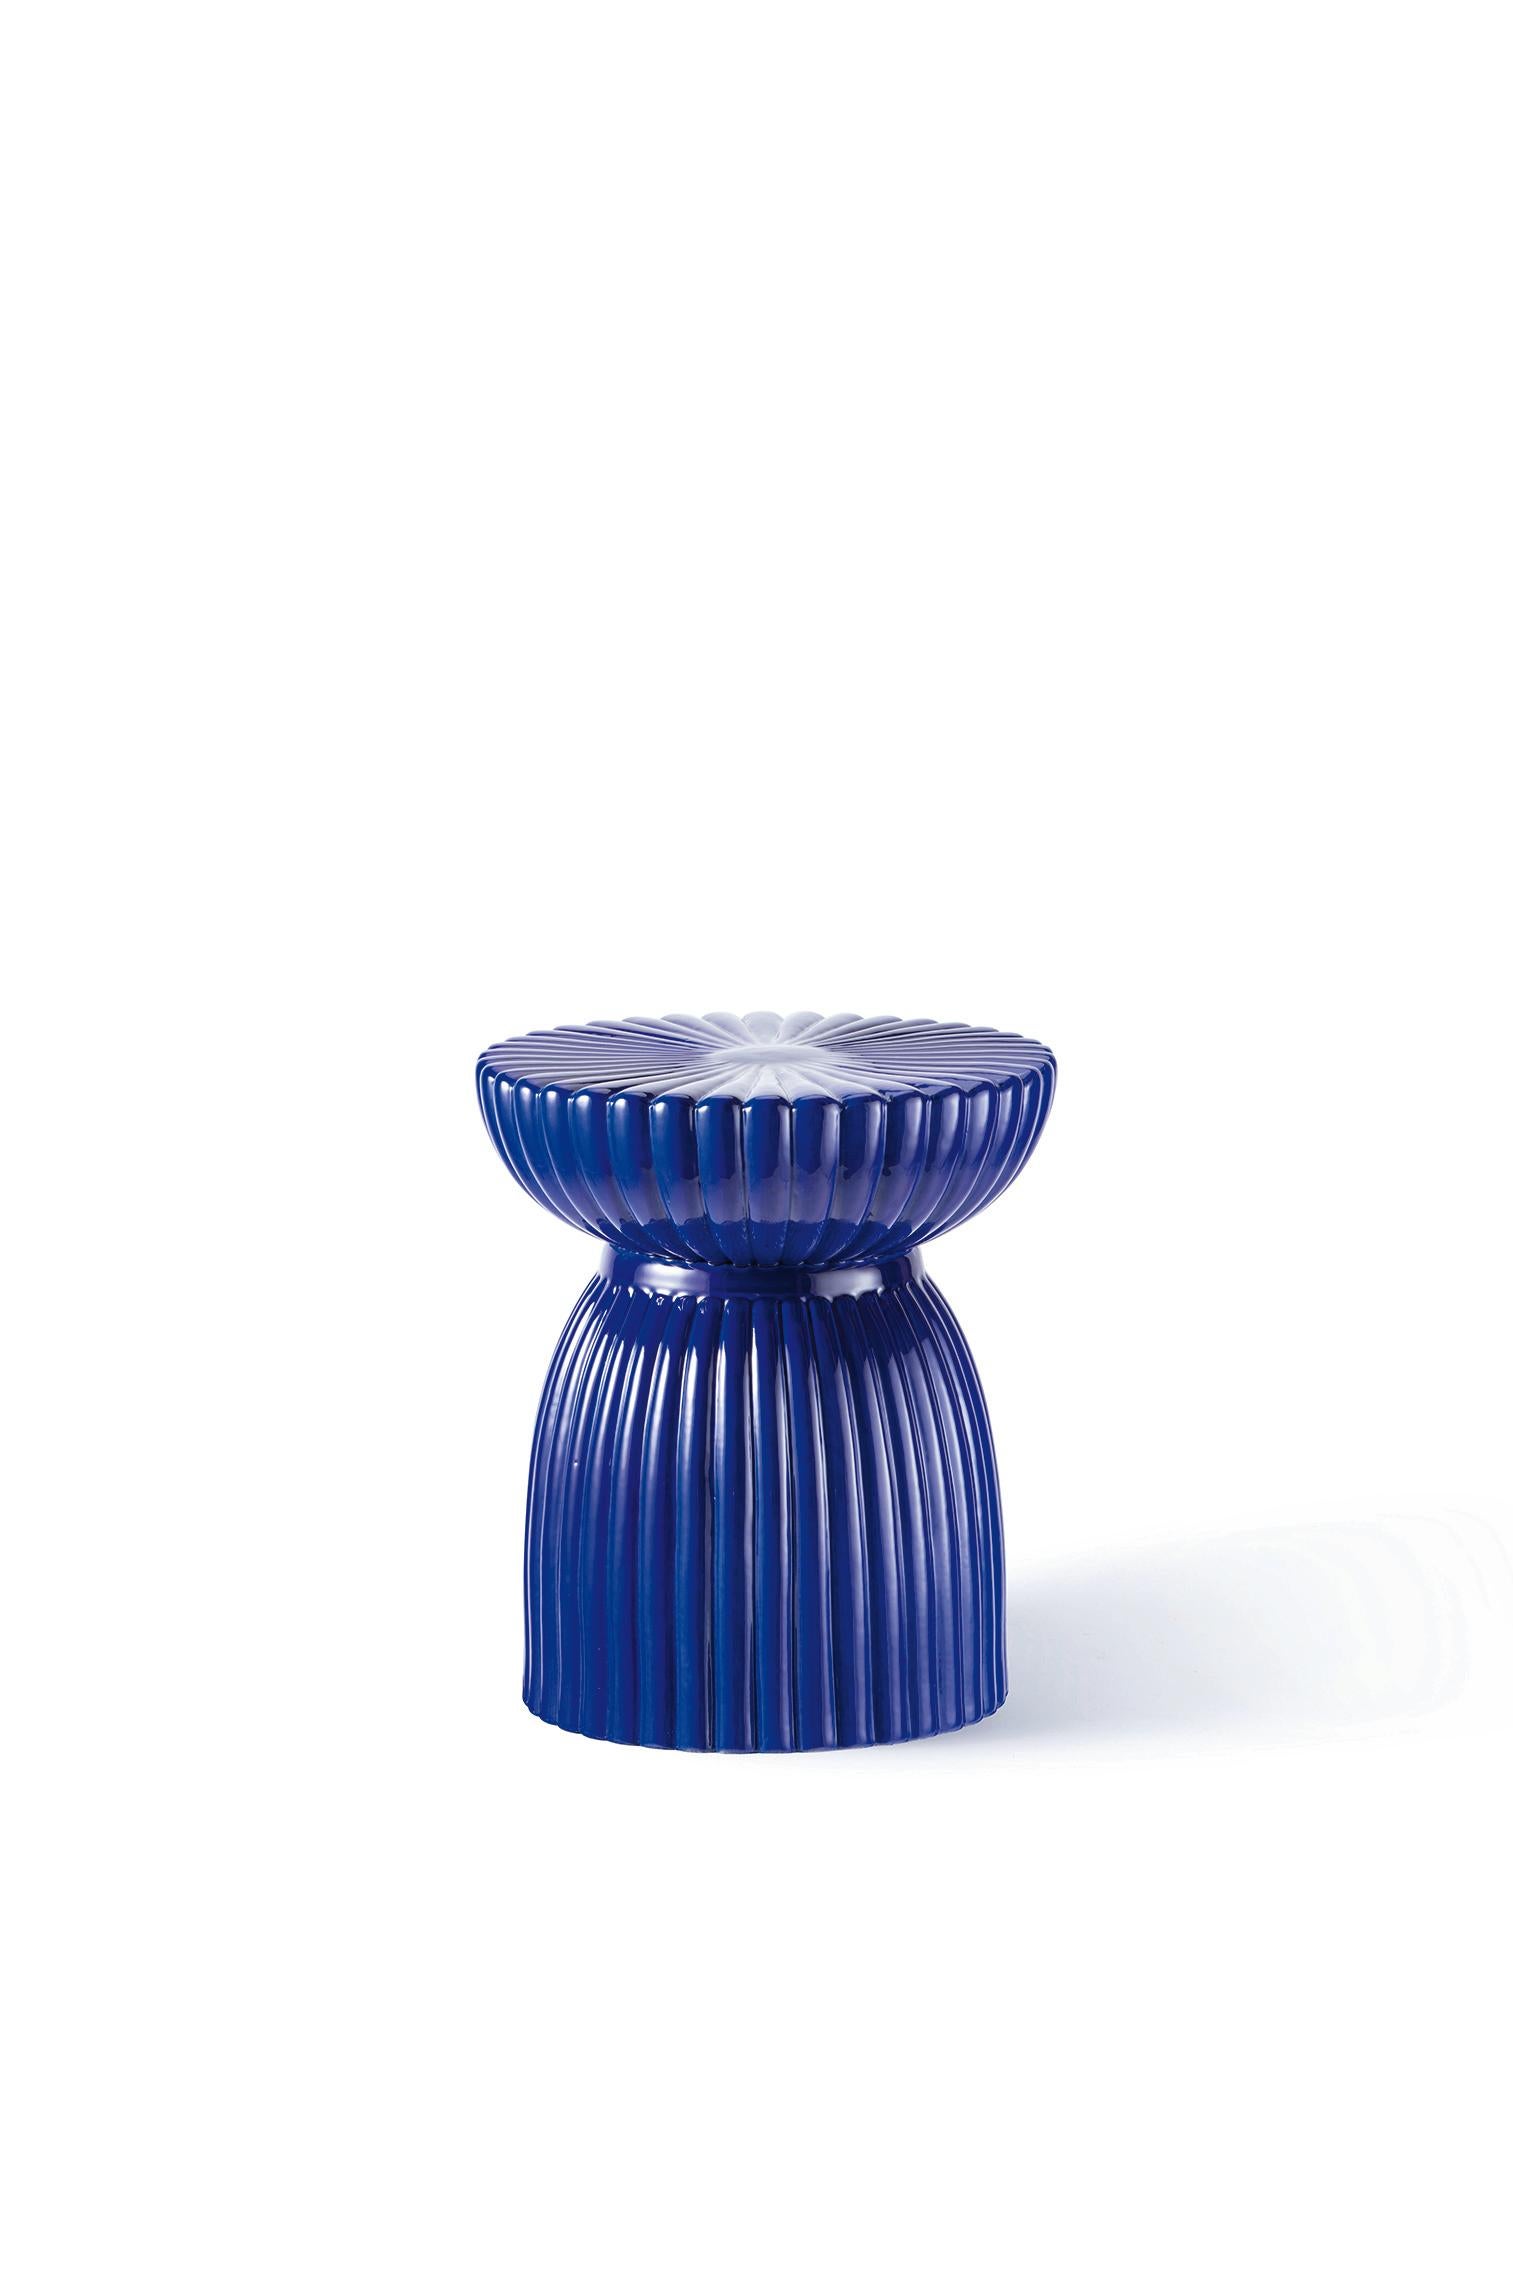 Modern Glossy Ceramic Stool / Guéridon Designed by Thomas Dariel